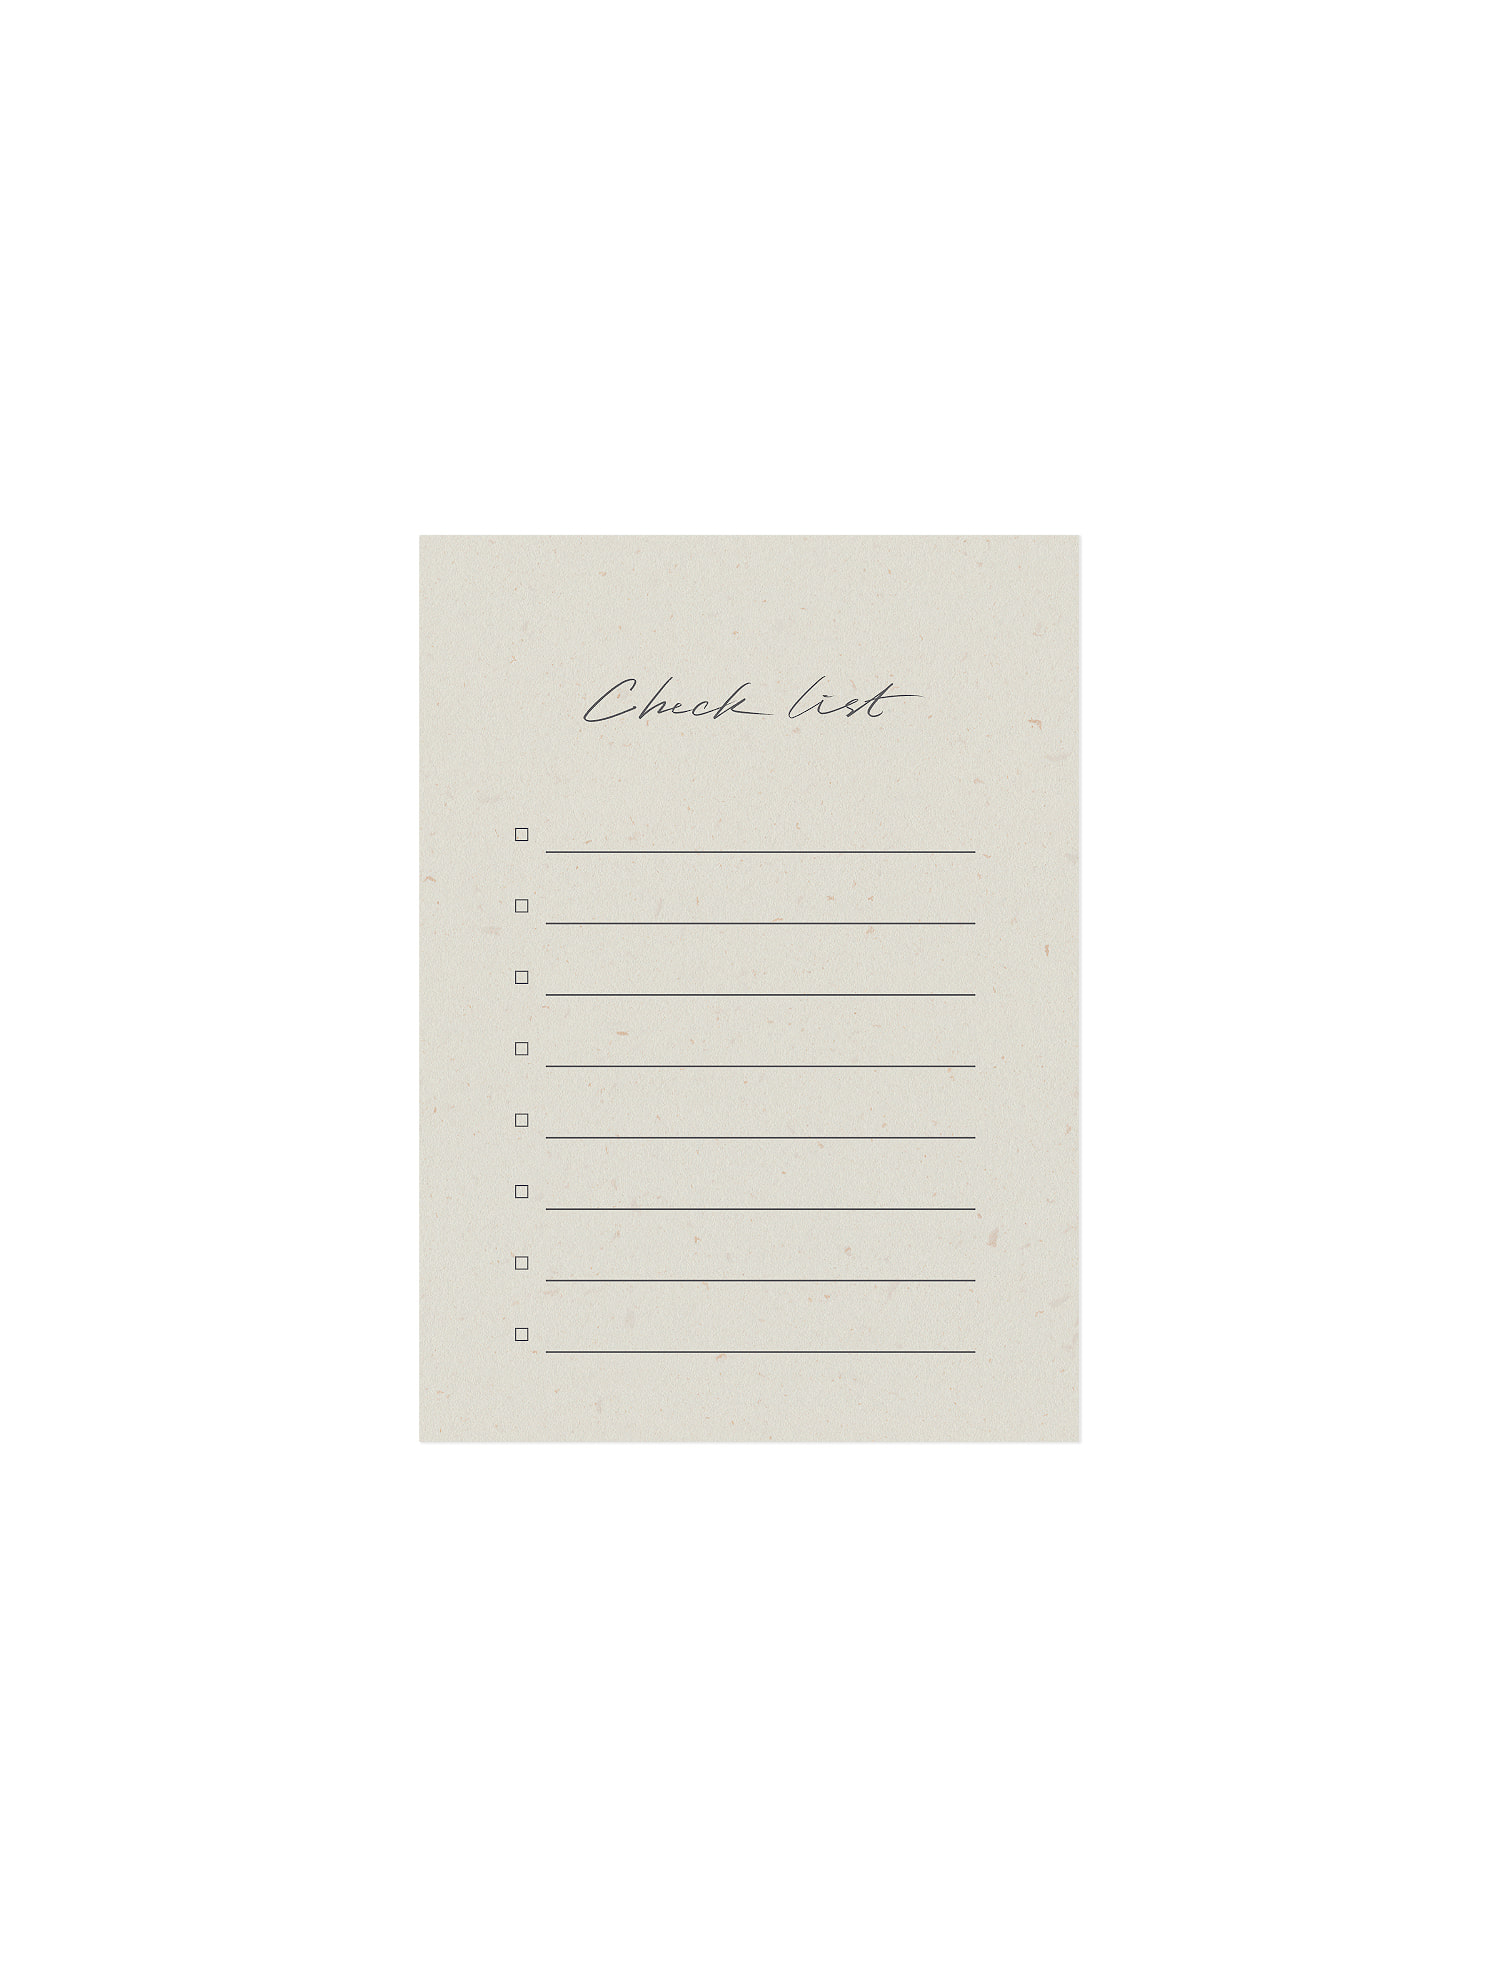 Calligraphy Check list Pad